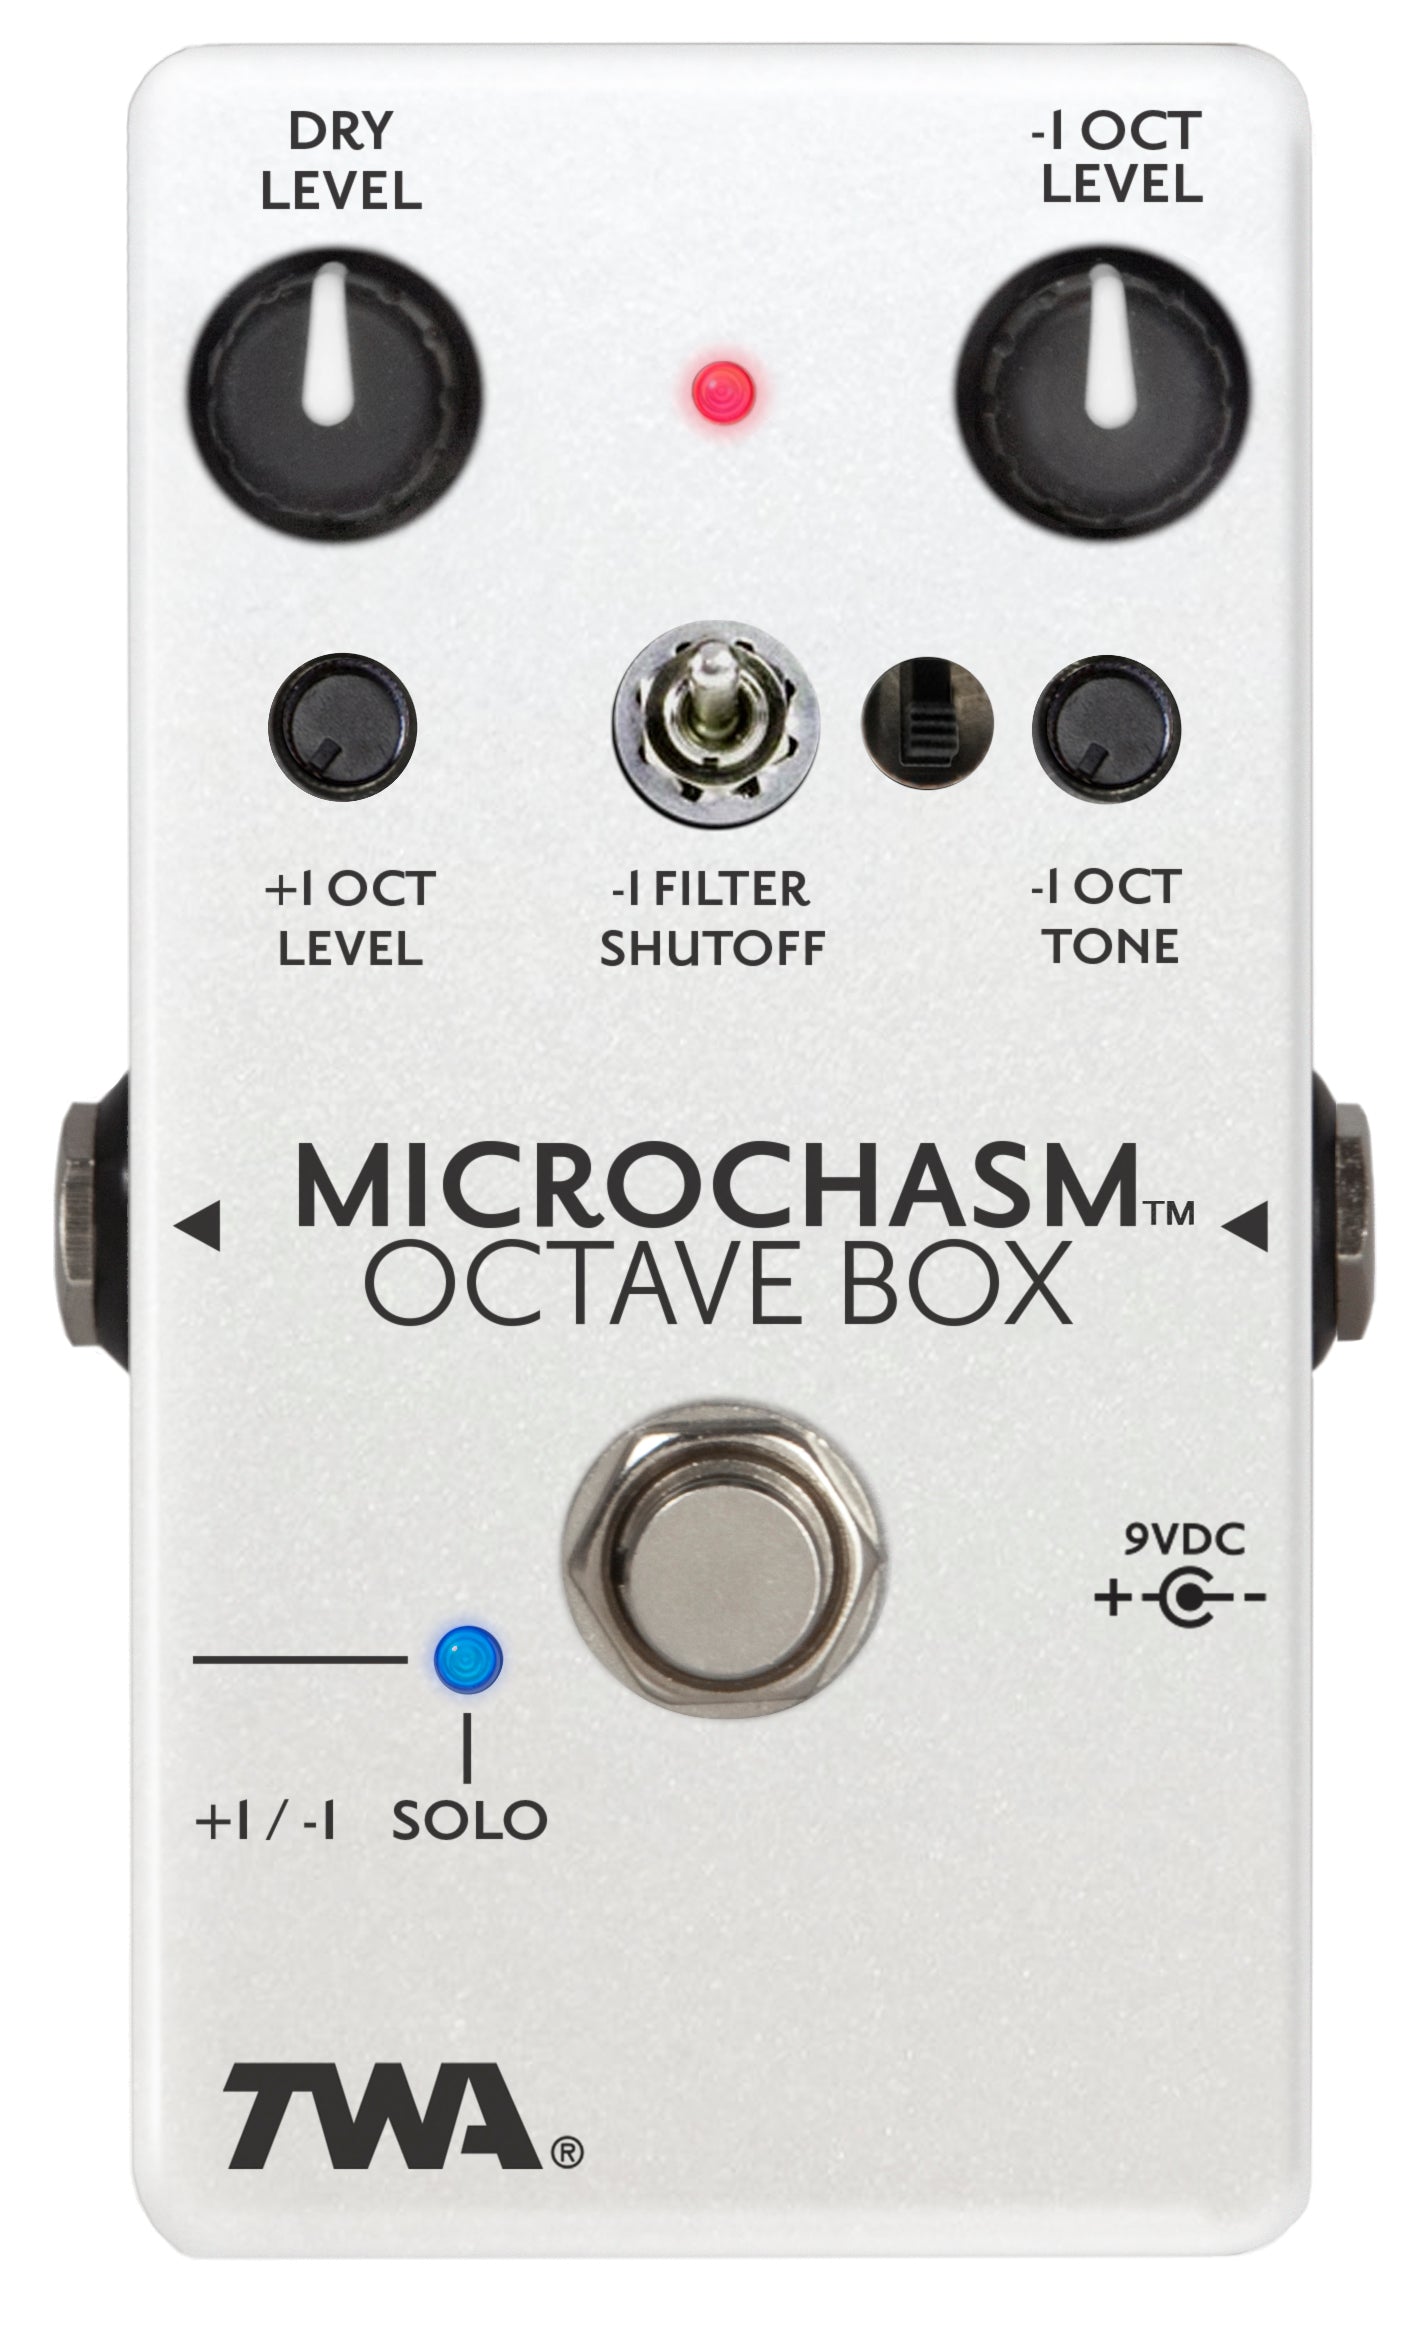 MC-01 MICROCHASM™ - octave box